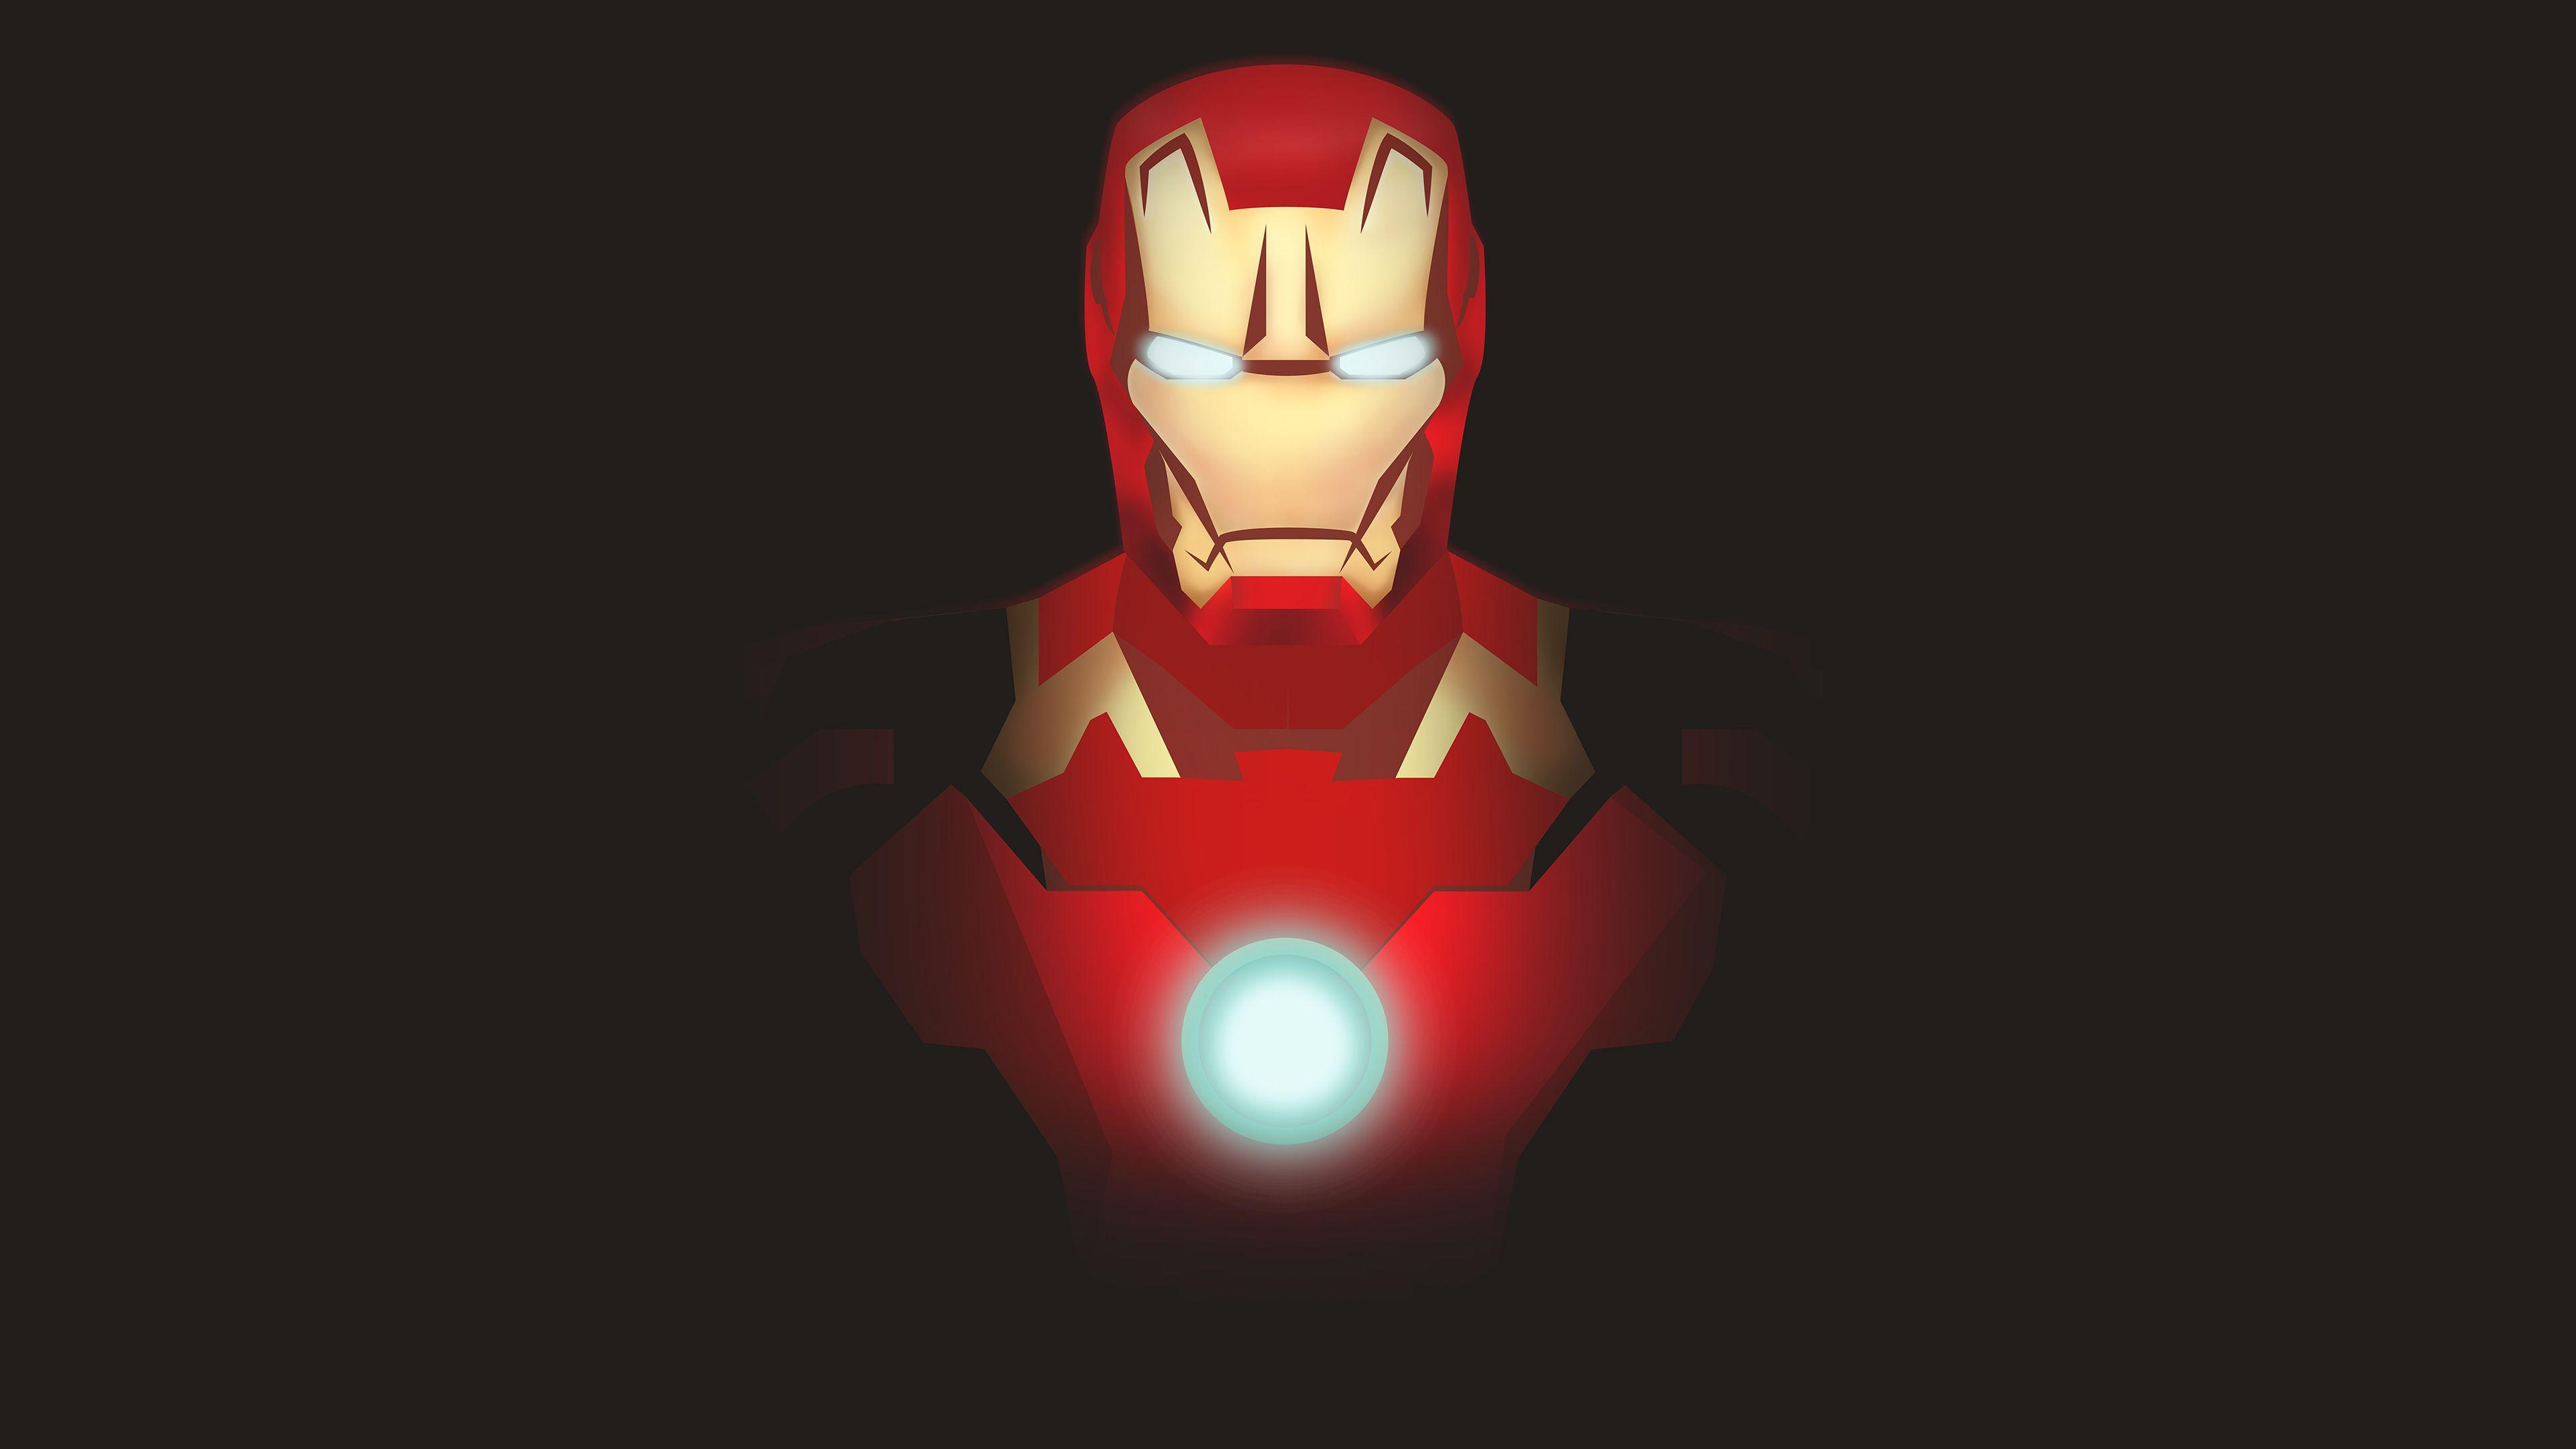 Iron Man Illustration superheroes wallpaper, iron man wallpaper, hd- wallpaper, digital art wallpaper, behance wal. Iron man wallpaper, Iron man, Man wallpaper